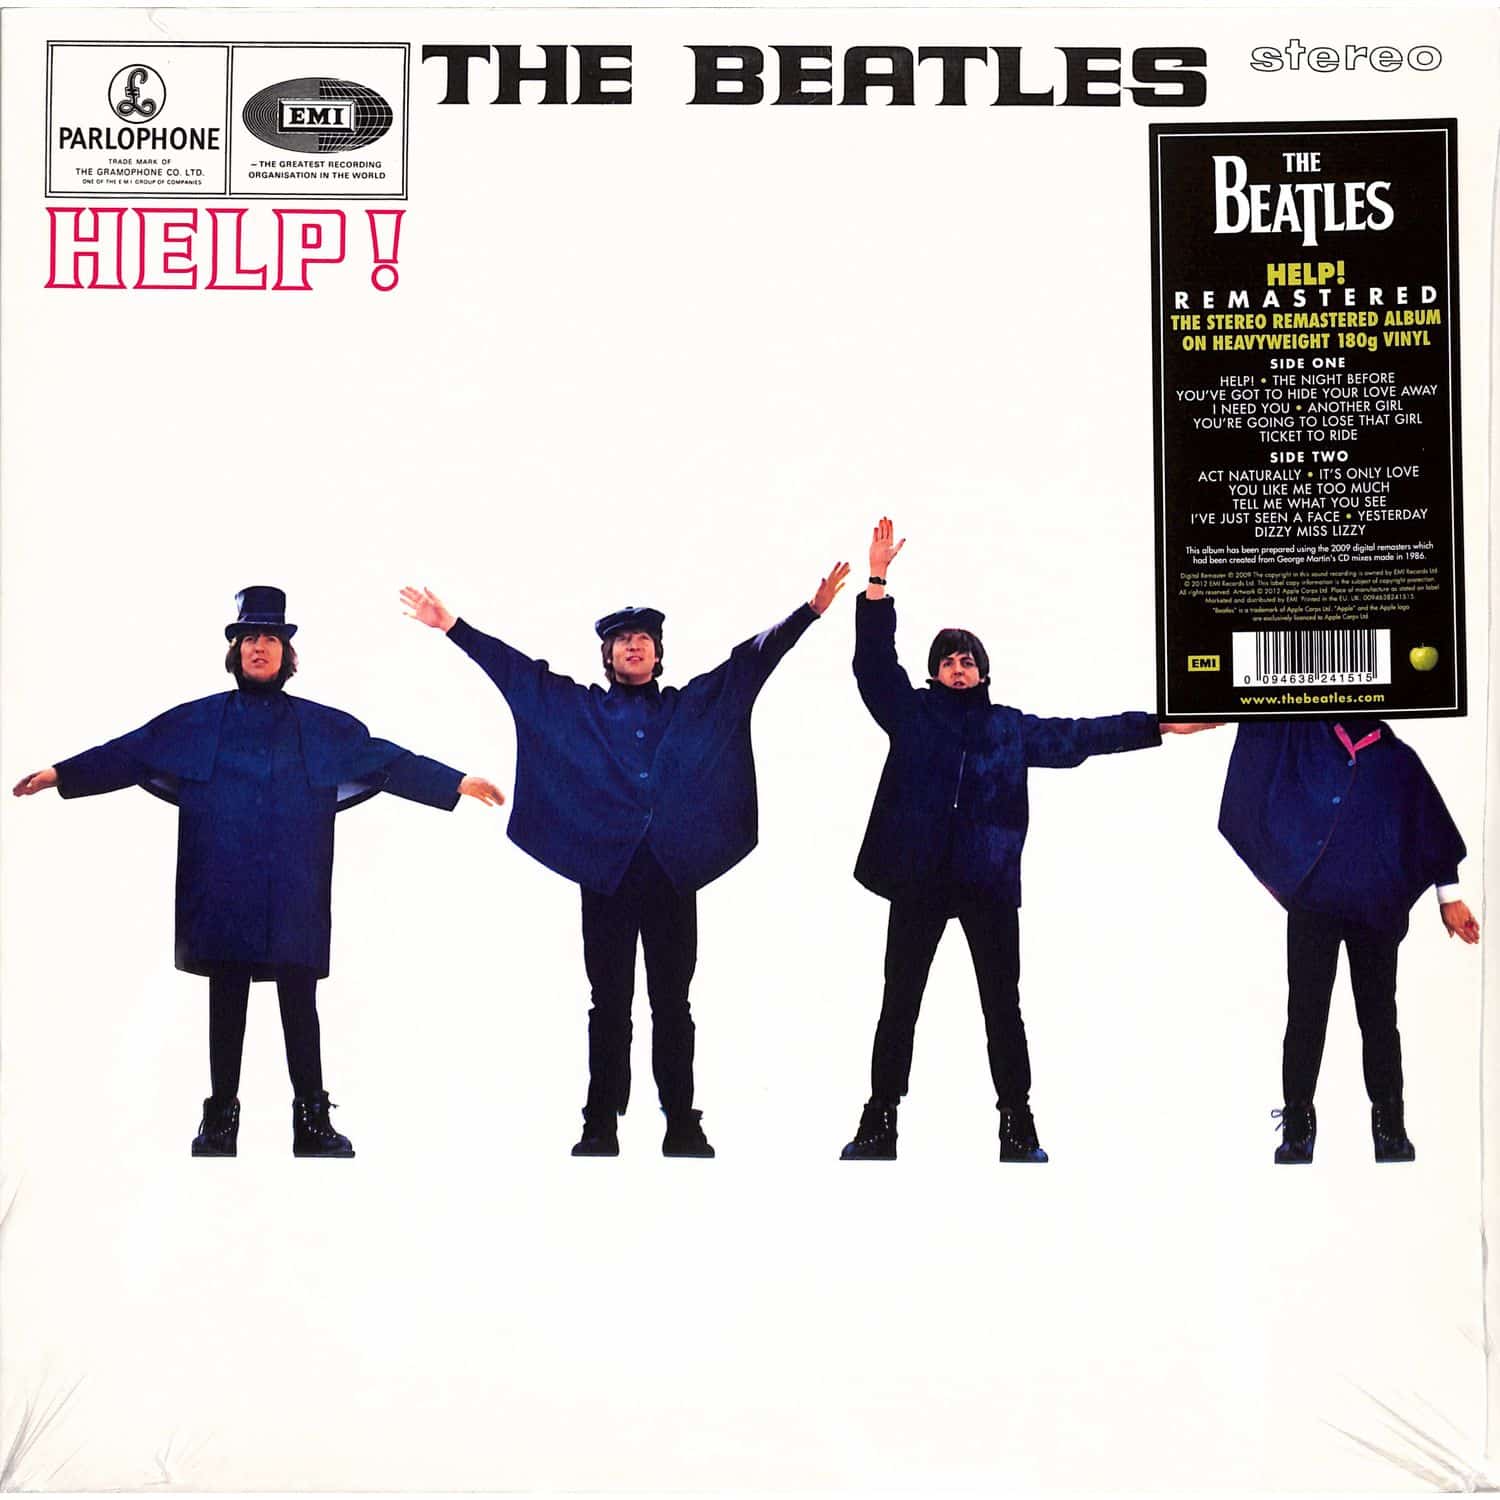 The Beatles - HELP! 